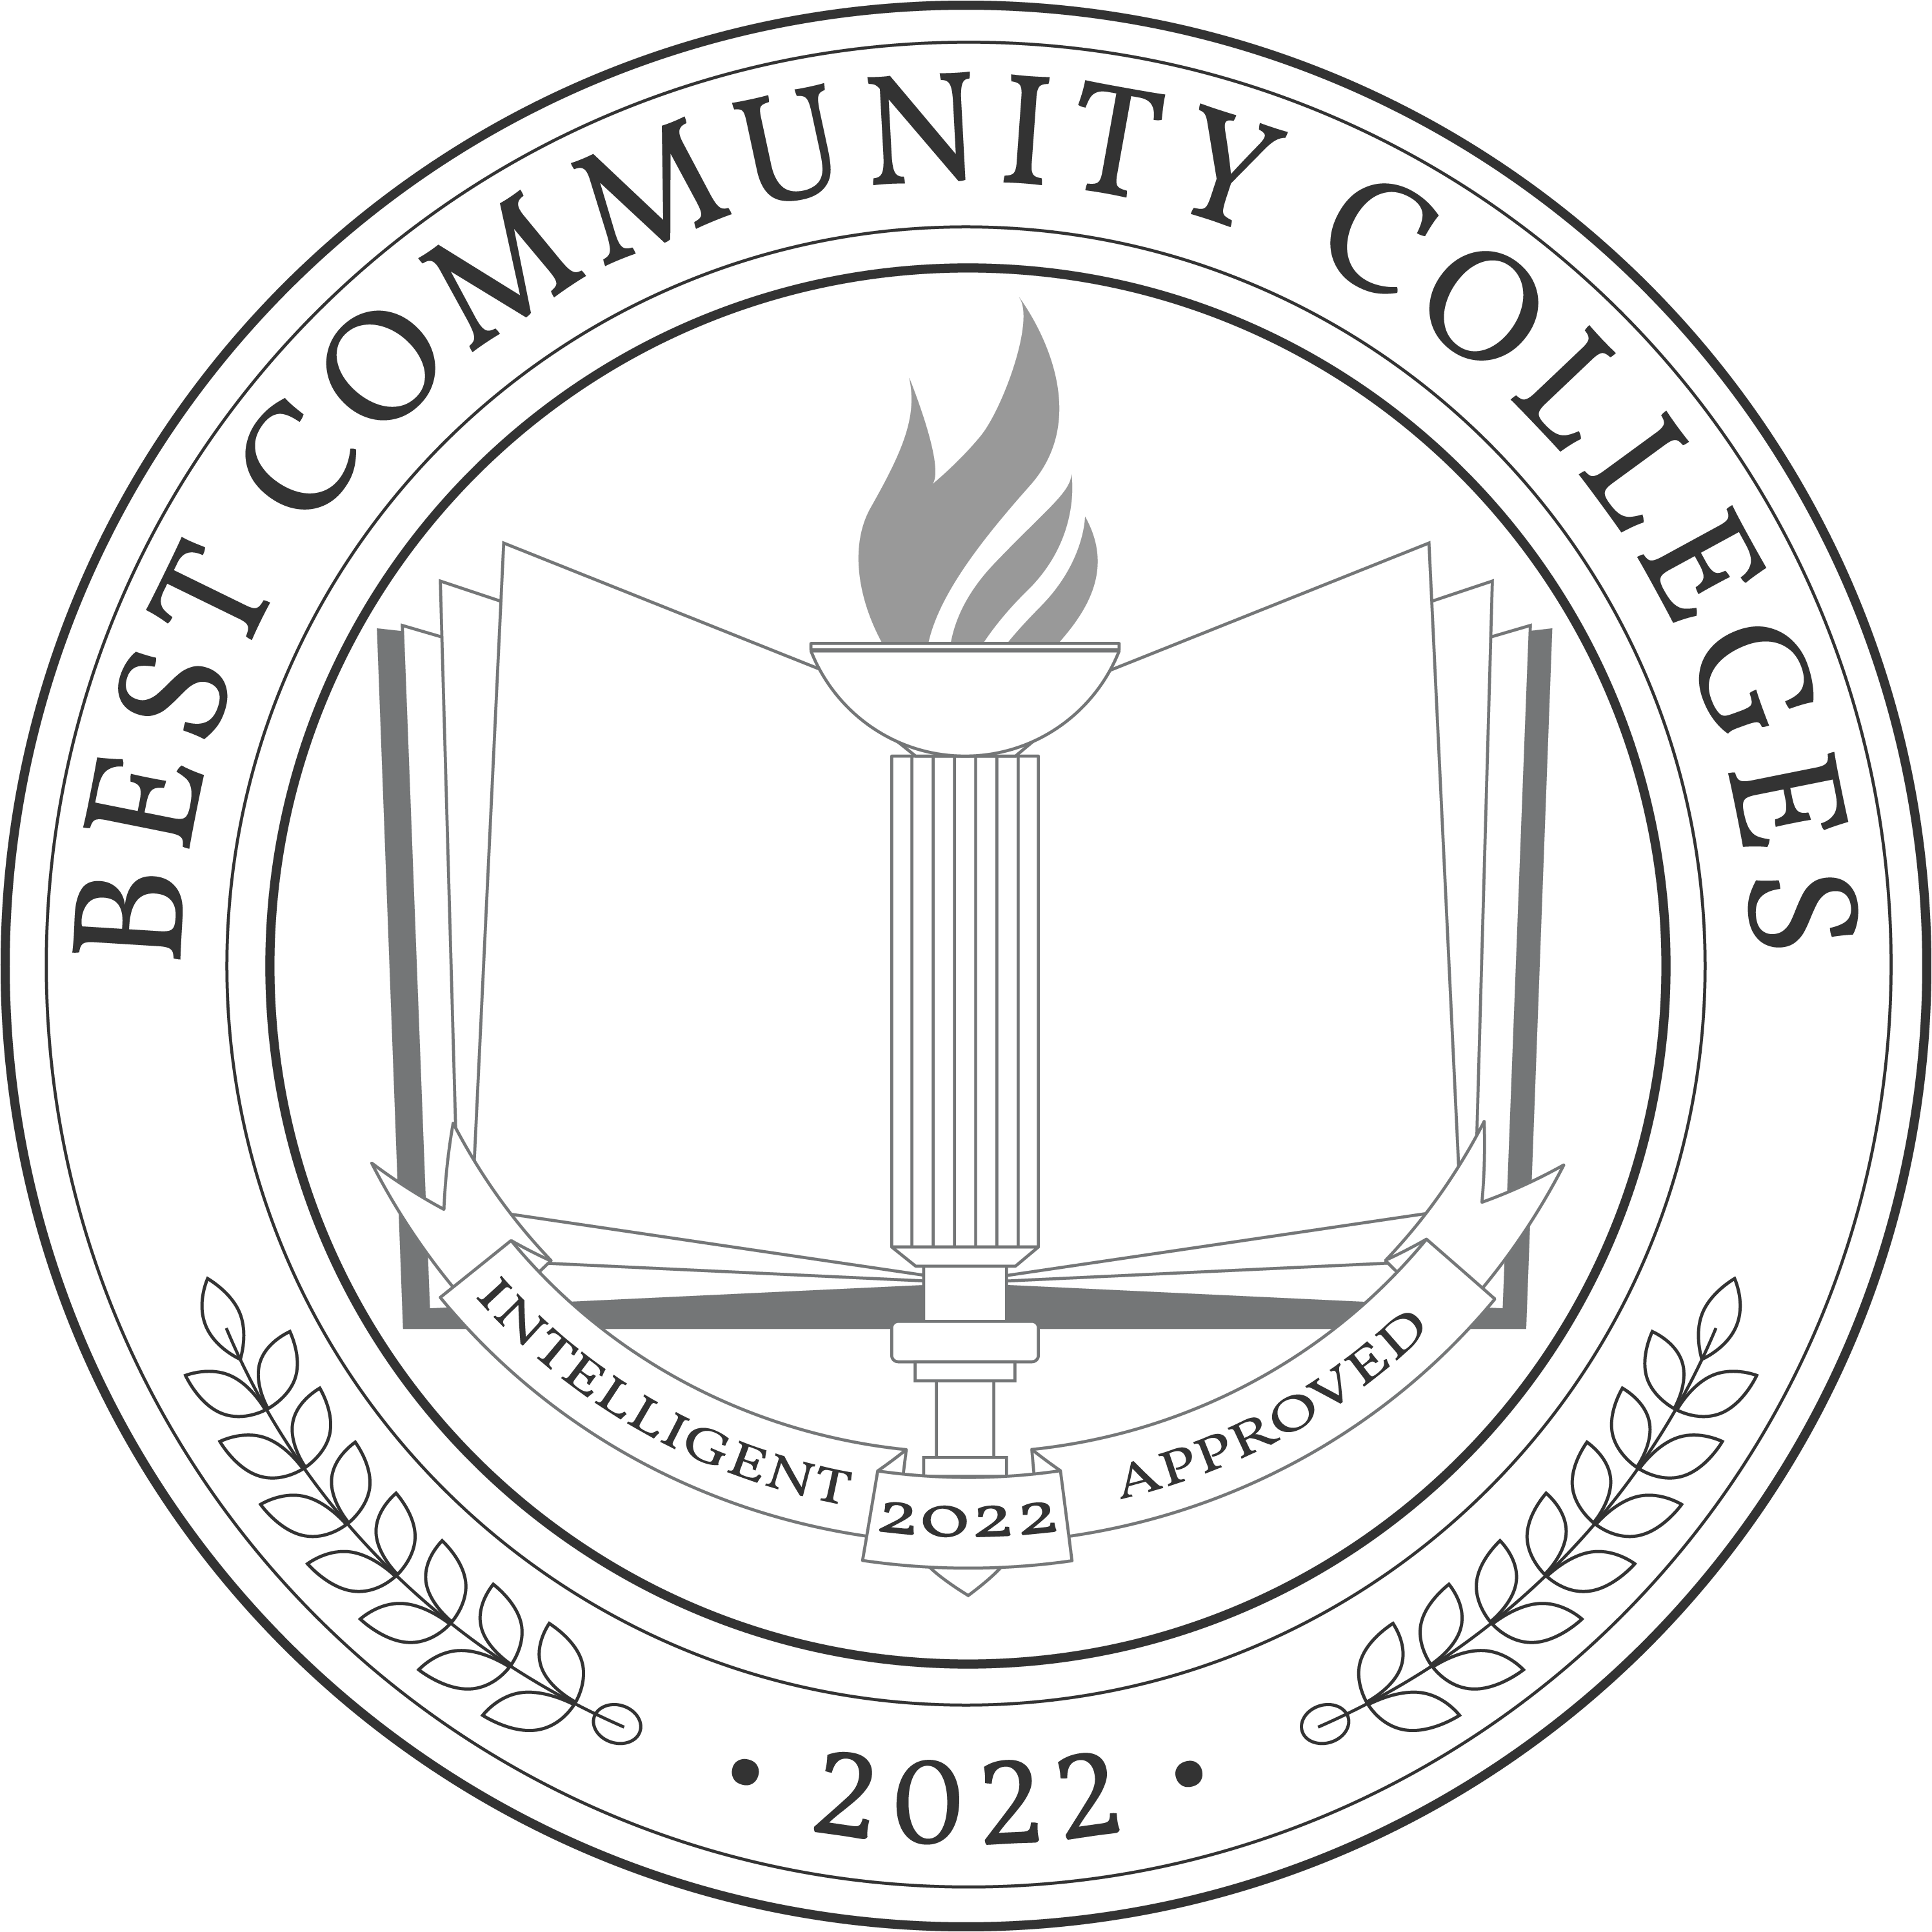 Best Community Colleges 2022 Badge